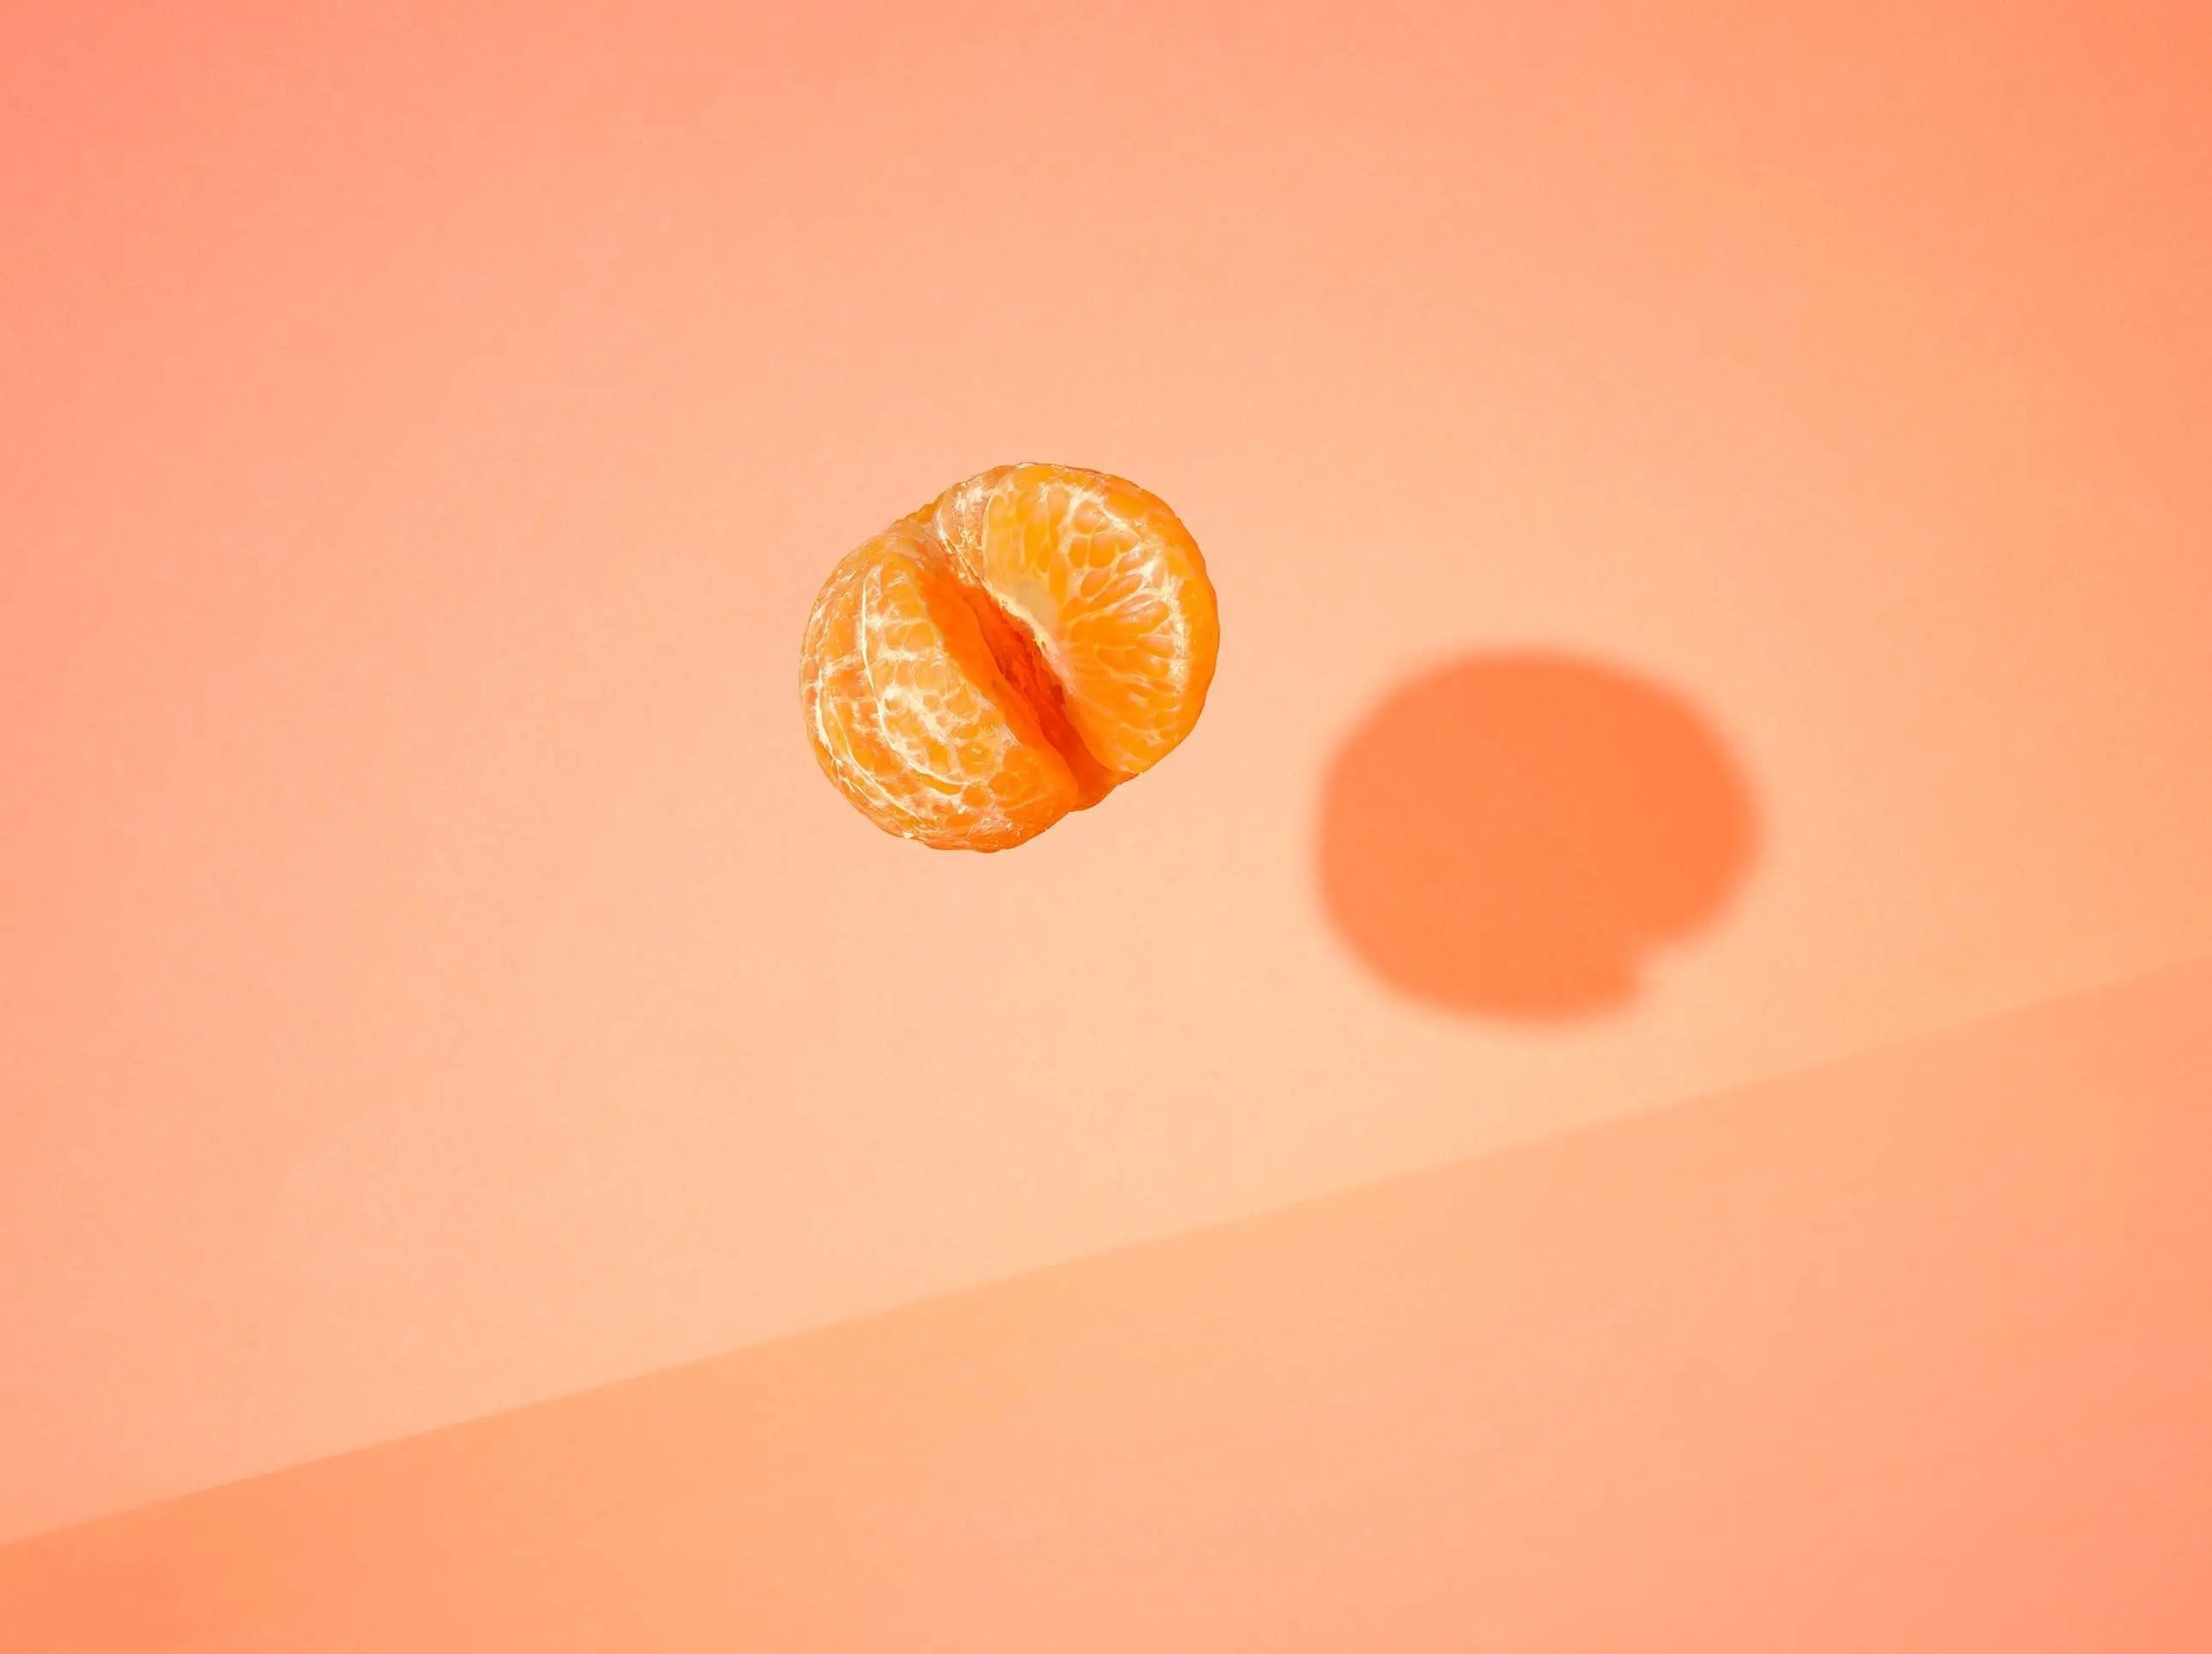 Tangerine pods